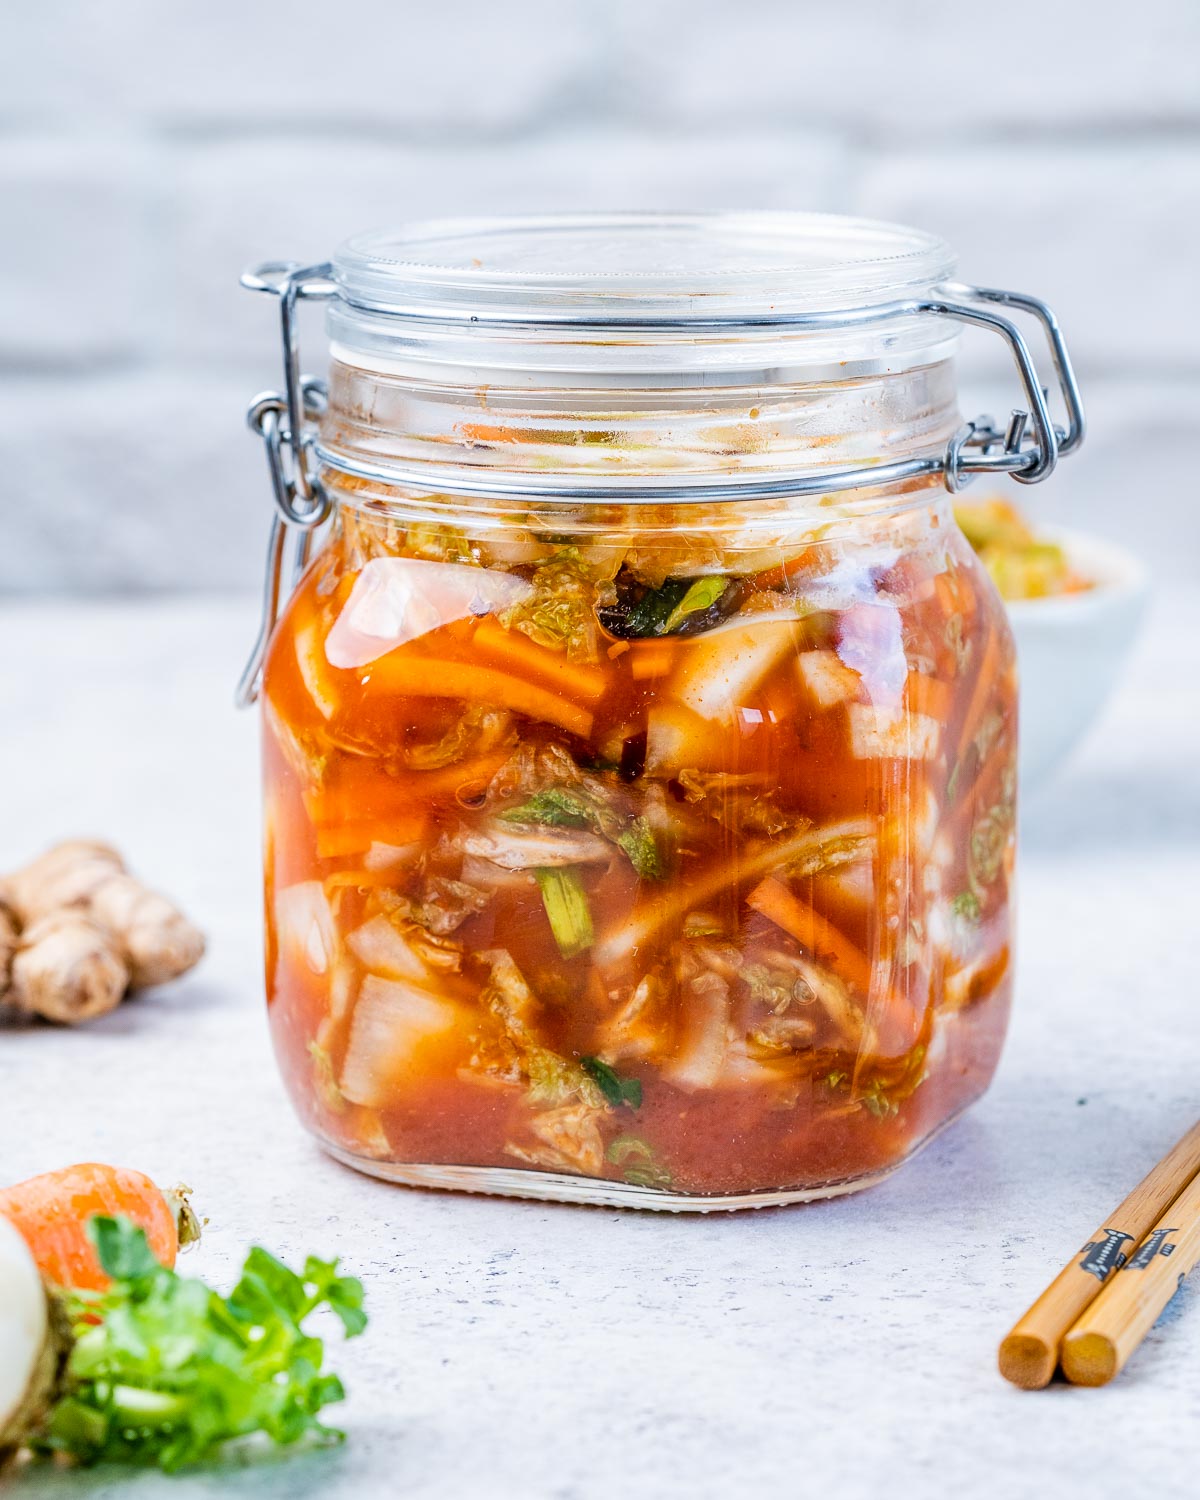 https://cleanfoodcrush.com/wp-content/uploads/2022/02/clean-eating-Homemade-Kimchi-recipe.jpg